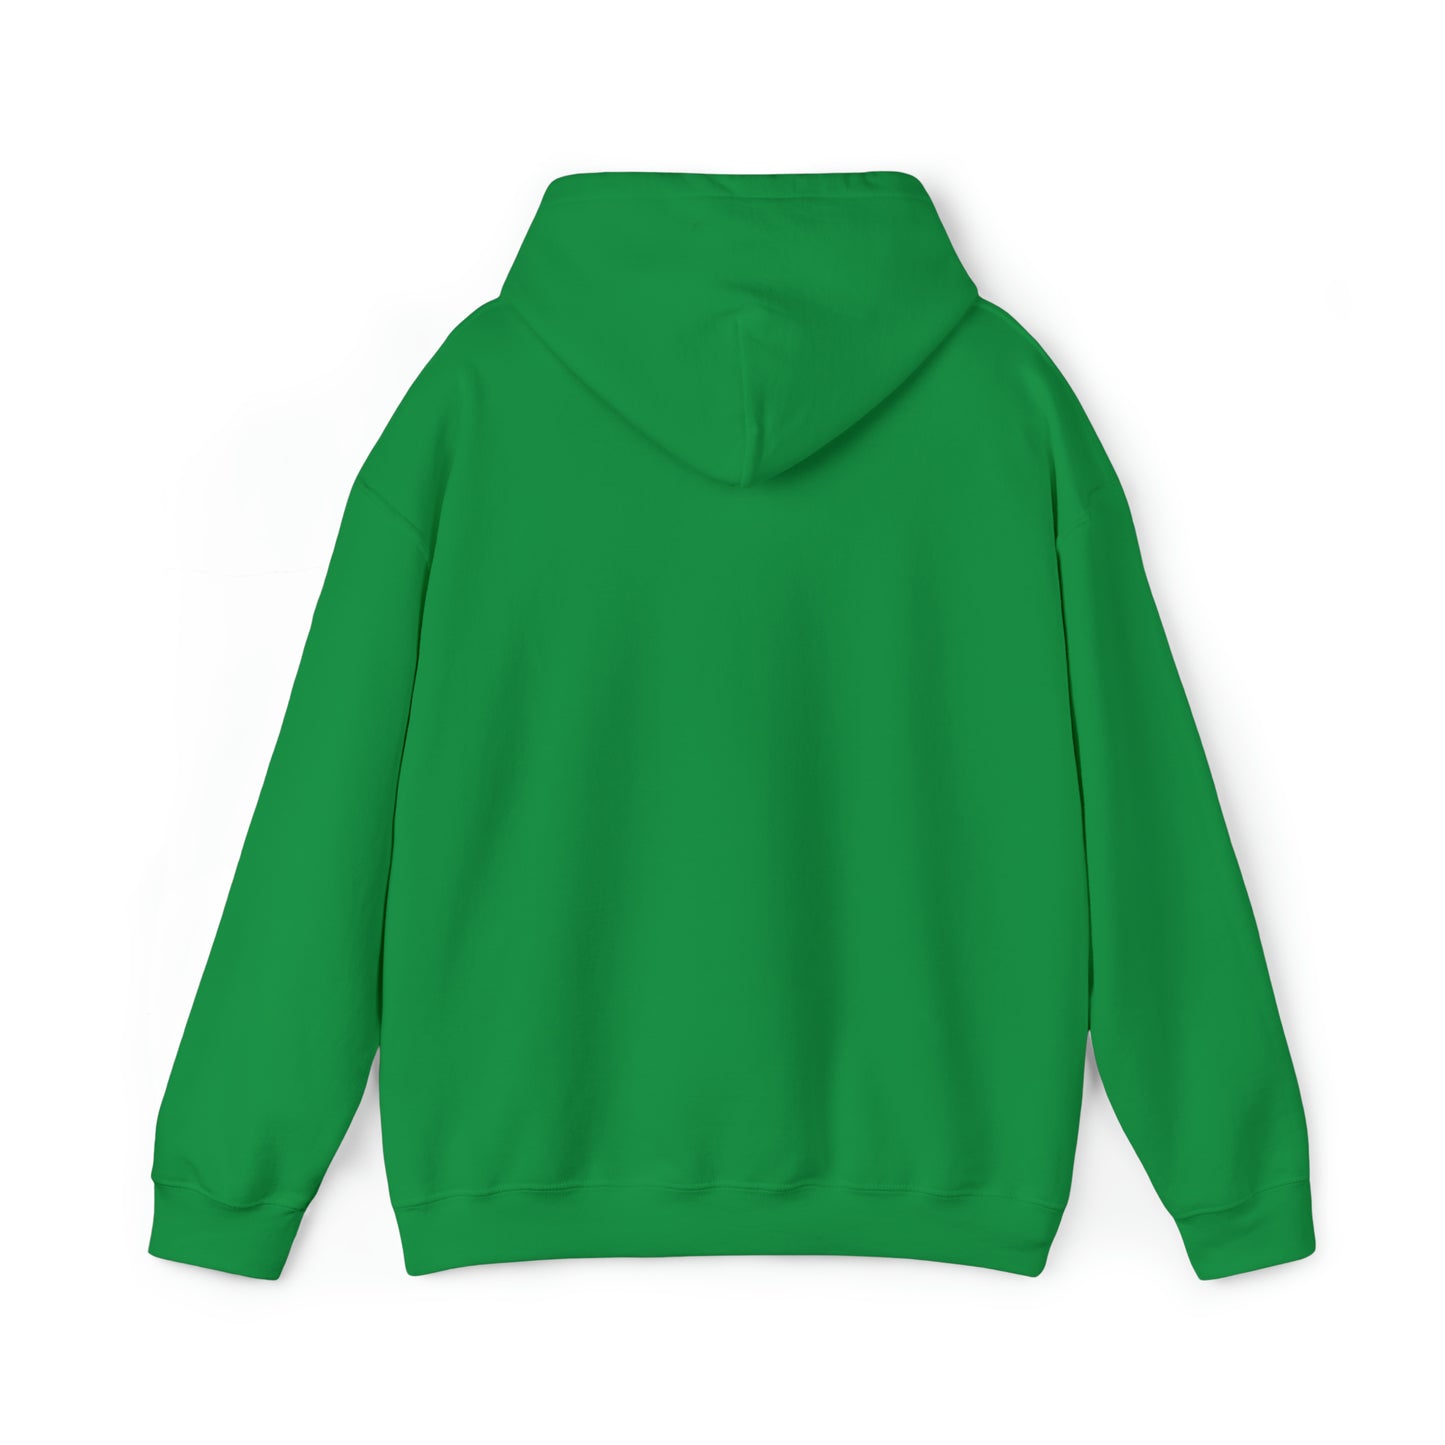 OOI-Stronger Than Storm Unisex Heavy Blend™ Hooded Sweatshirt